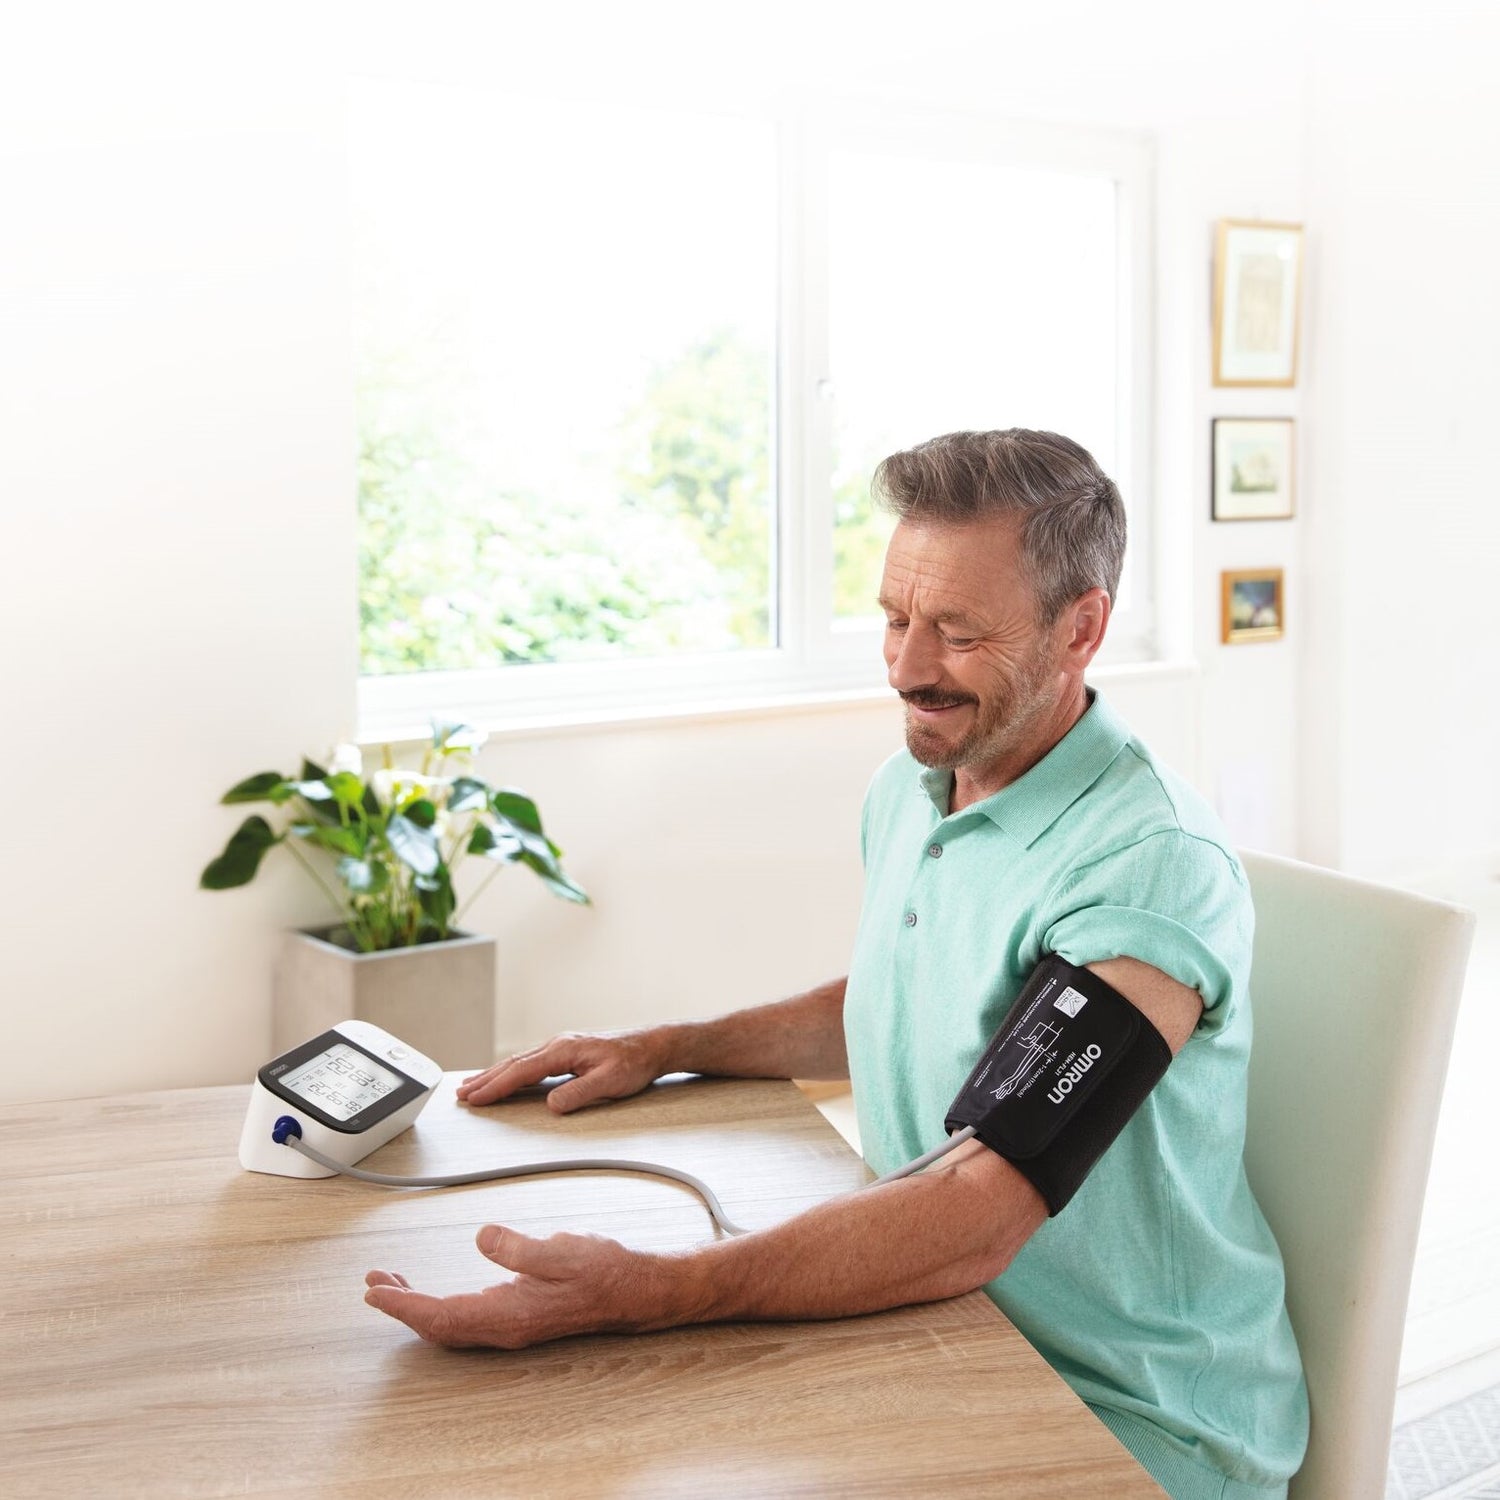 OMRON 7 Series® Wireless Upper Arm Blood Pressure Monitor (BP7350) – BV  Medical